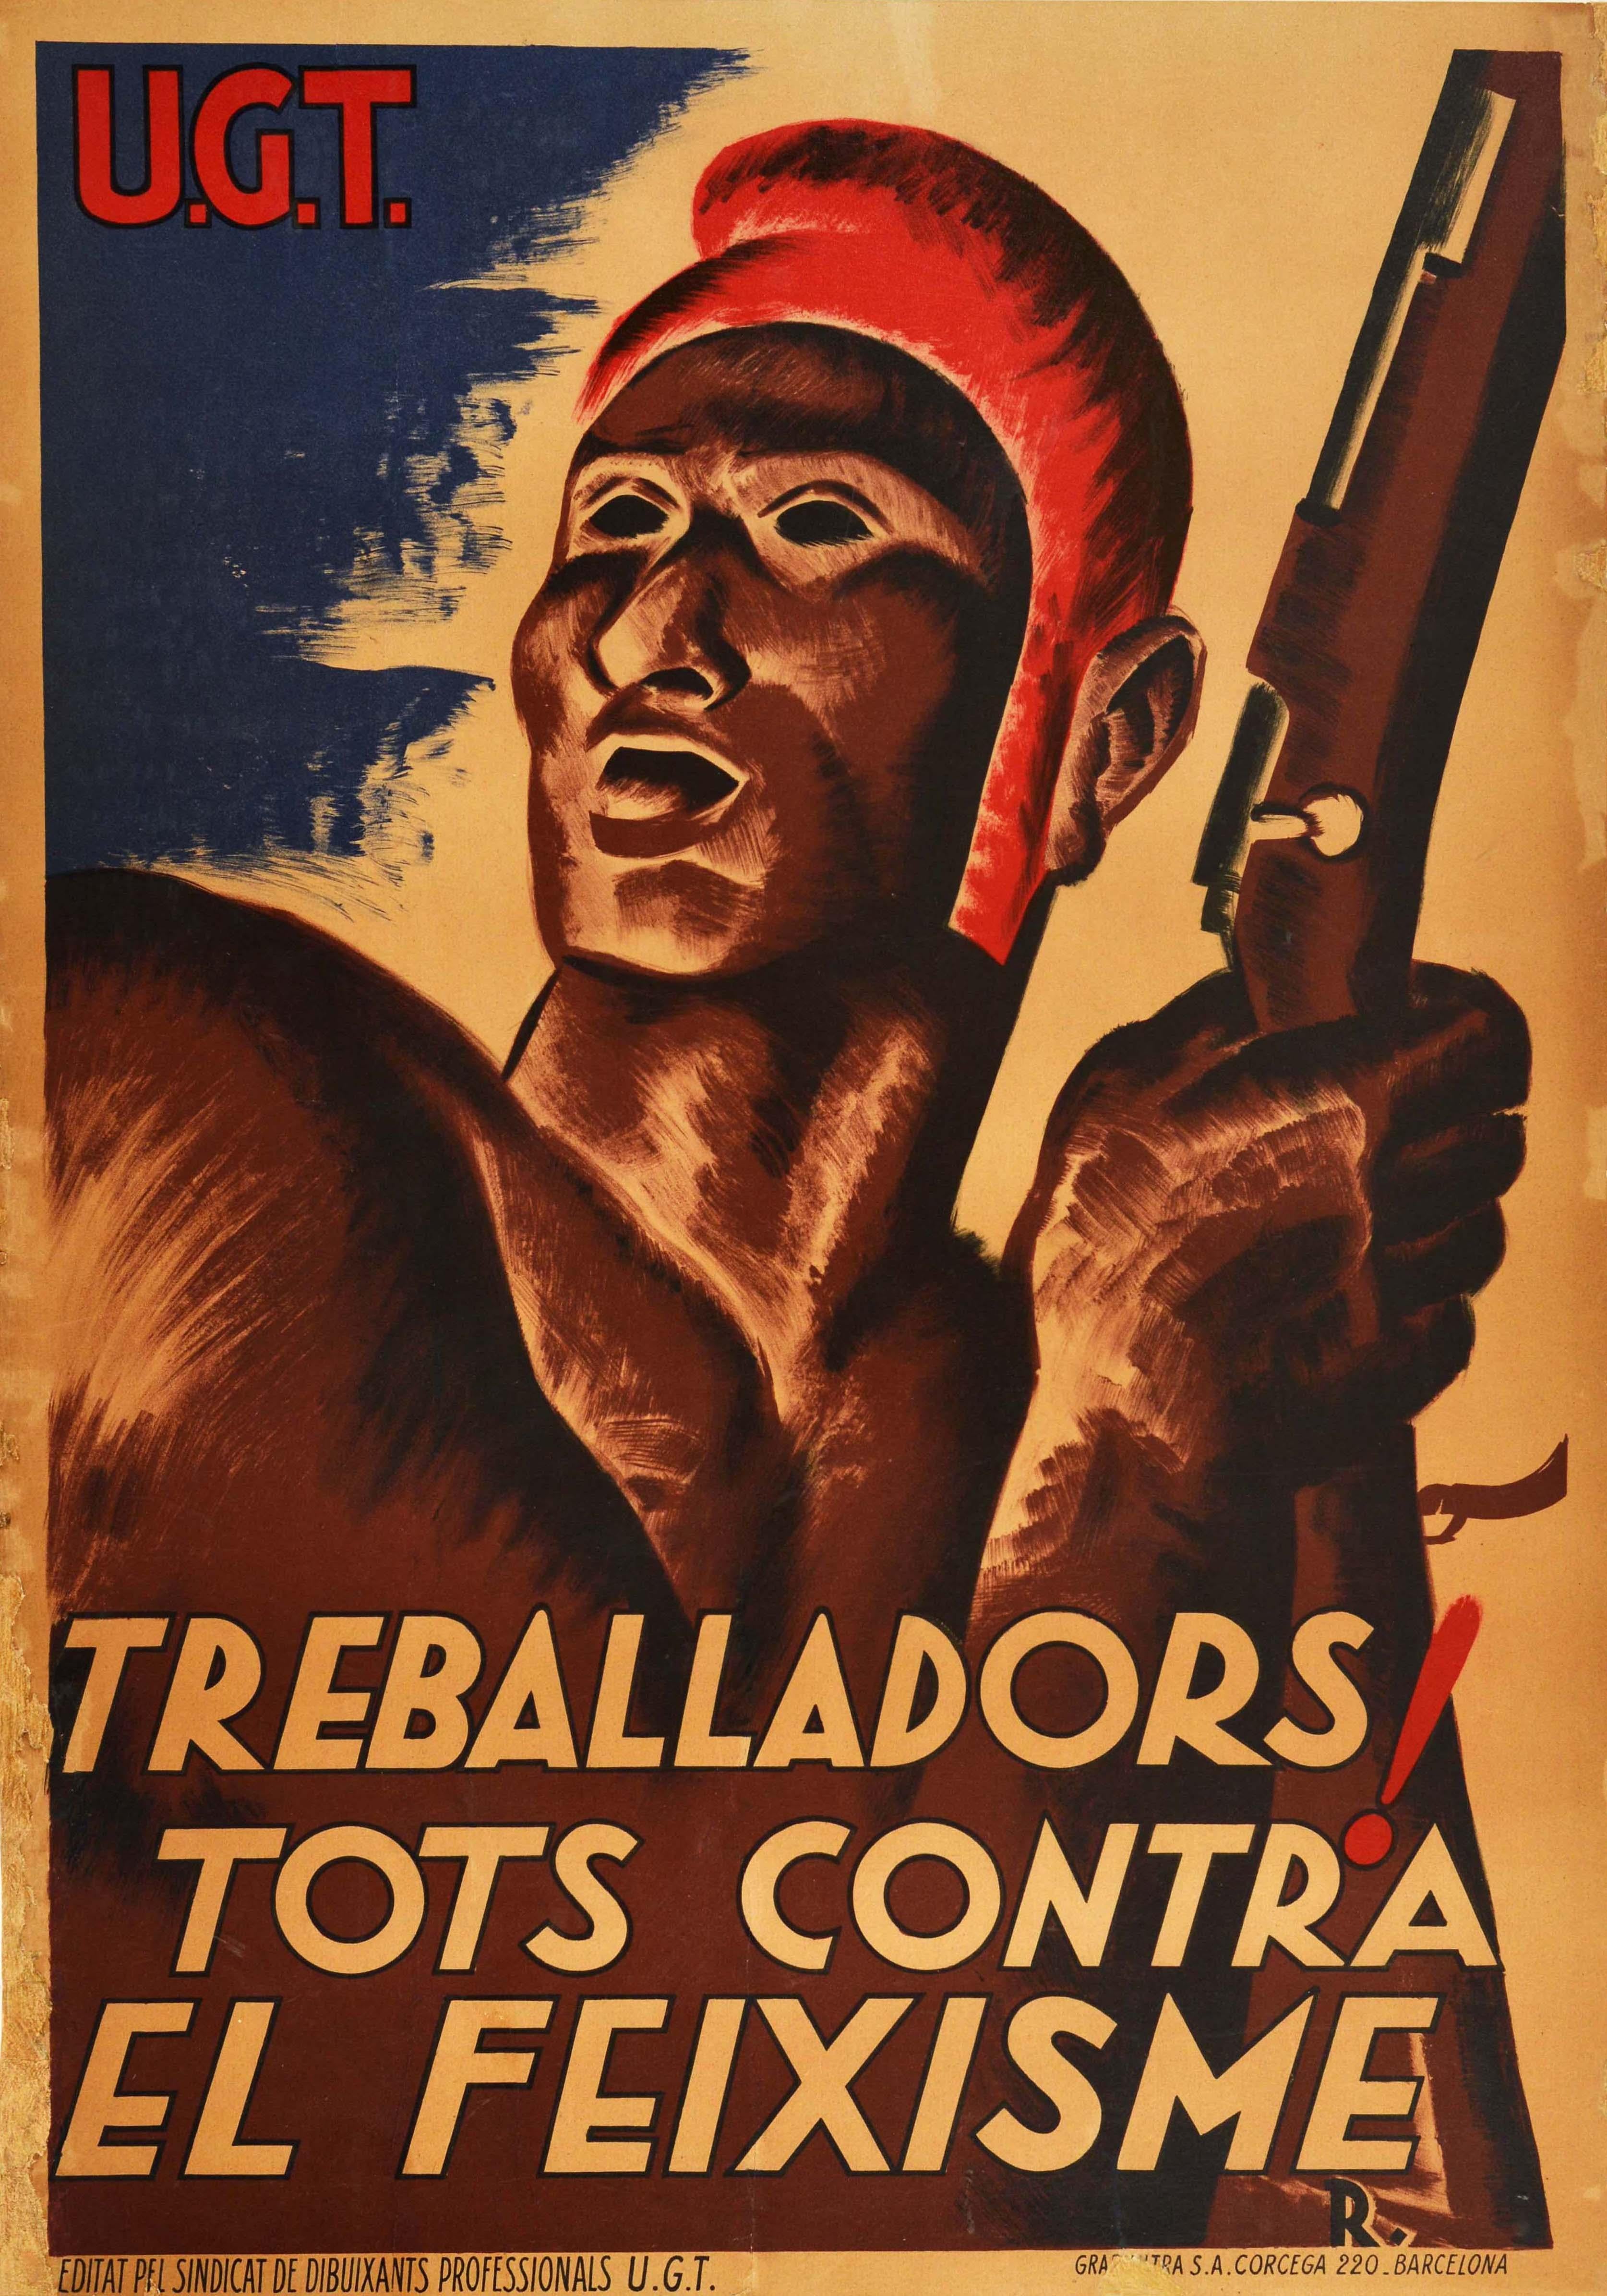 Unknown Print - Original Vintage Spanish Civil War Poster Treballadors! Workers Against Fascism